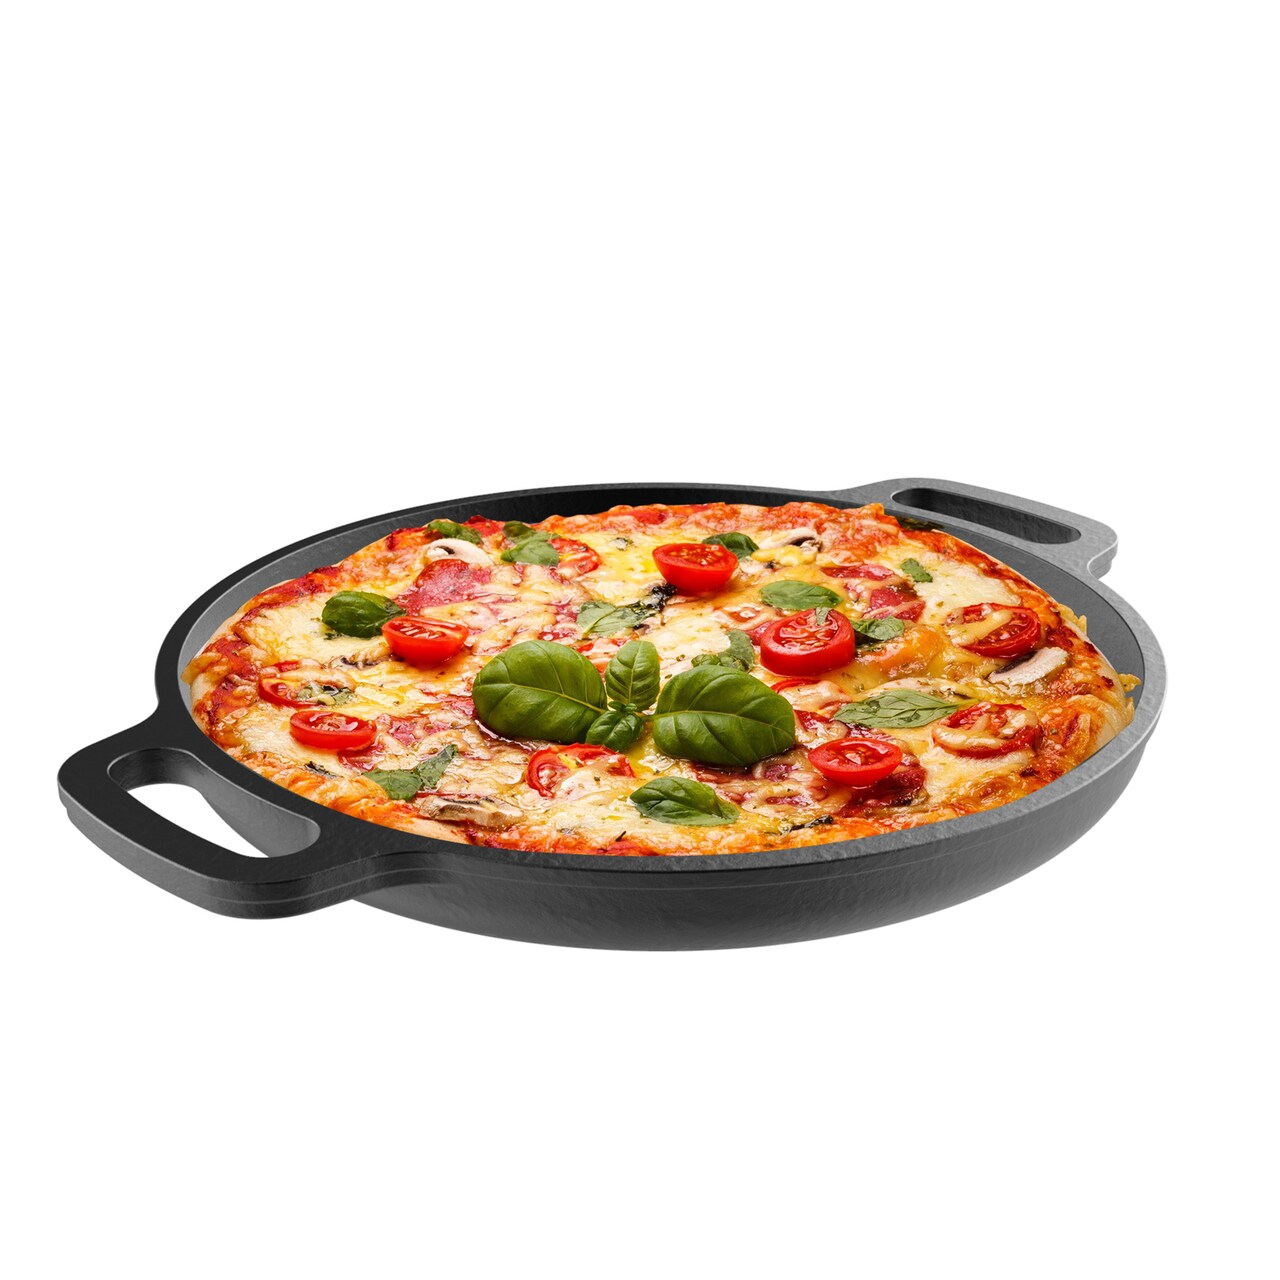 Classic Cuisine Cast Iron Pre-Seasoned Pizza Pan Skillet Cooking